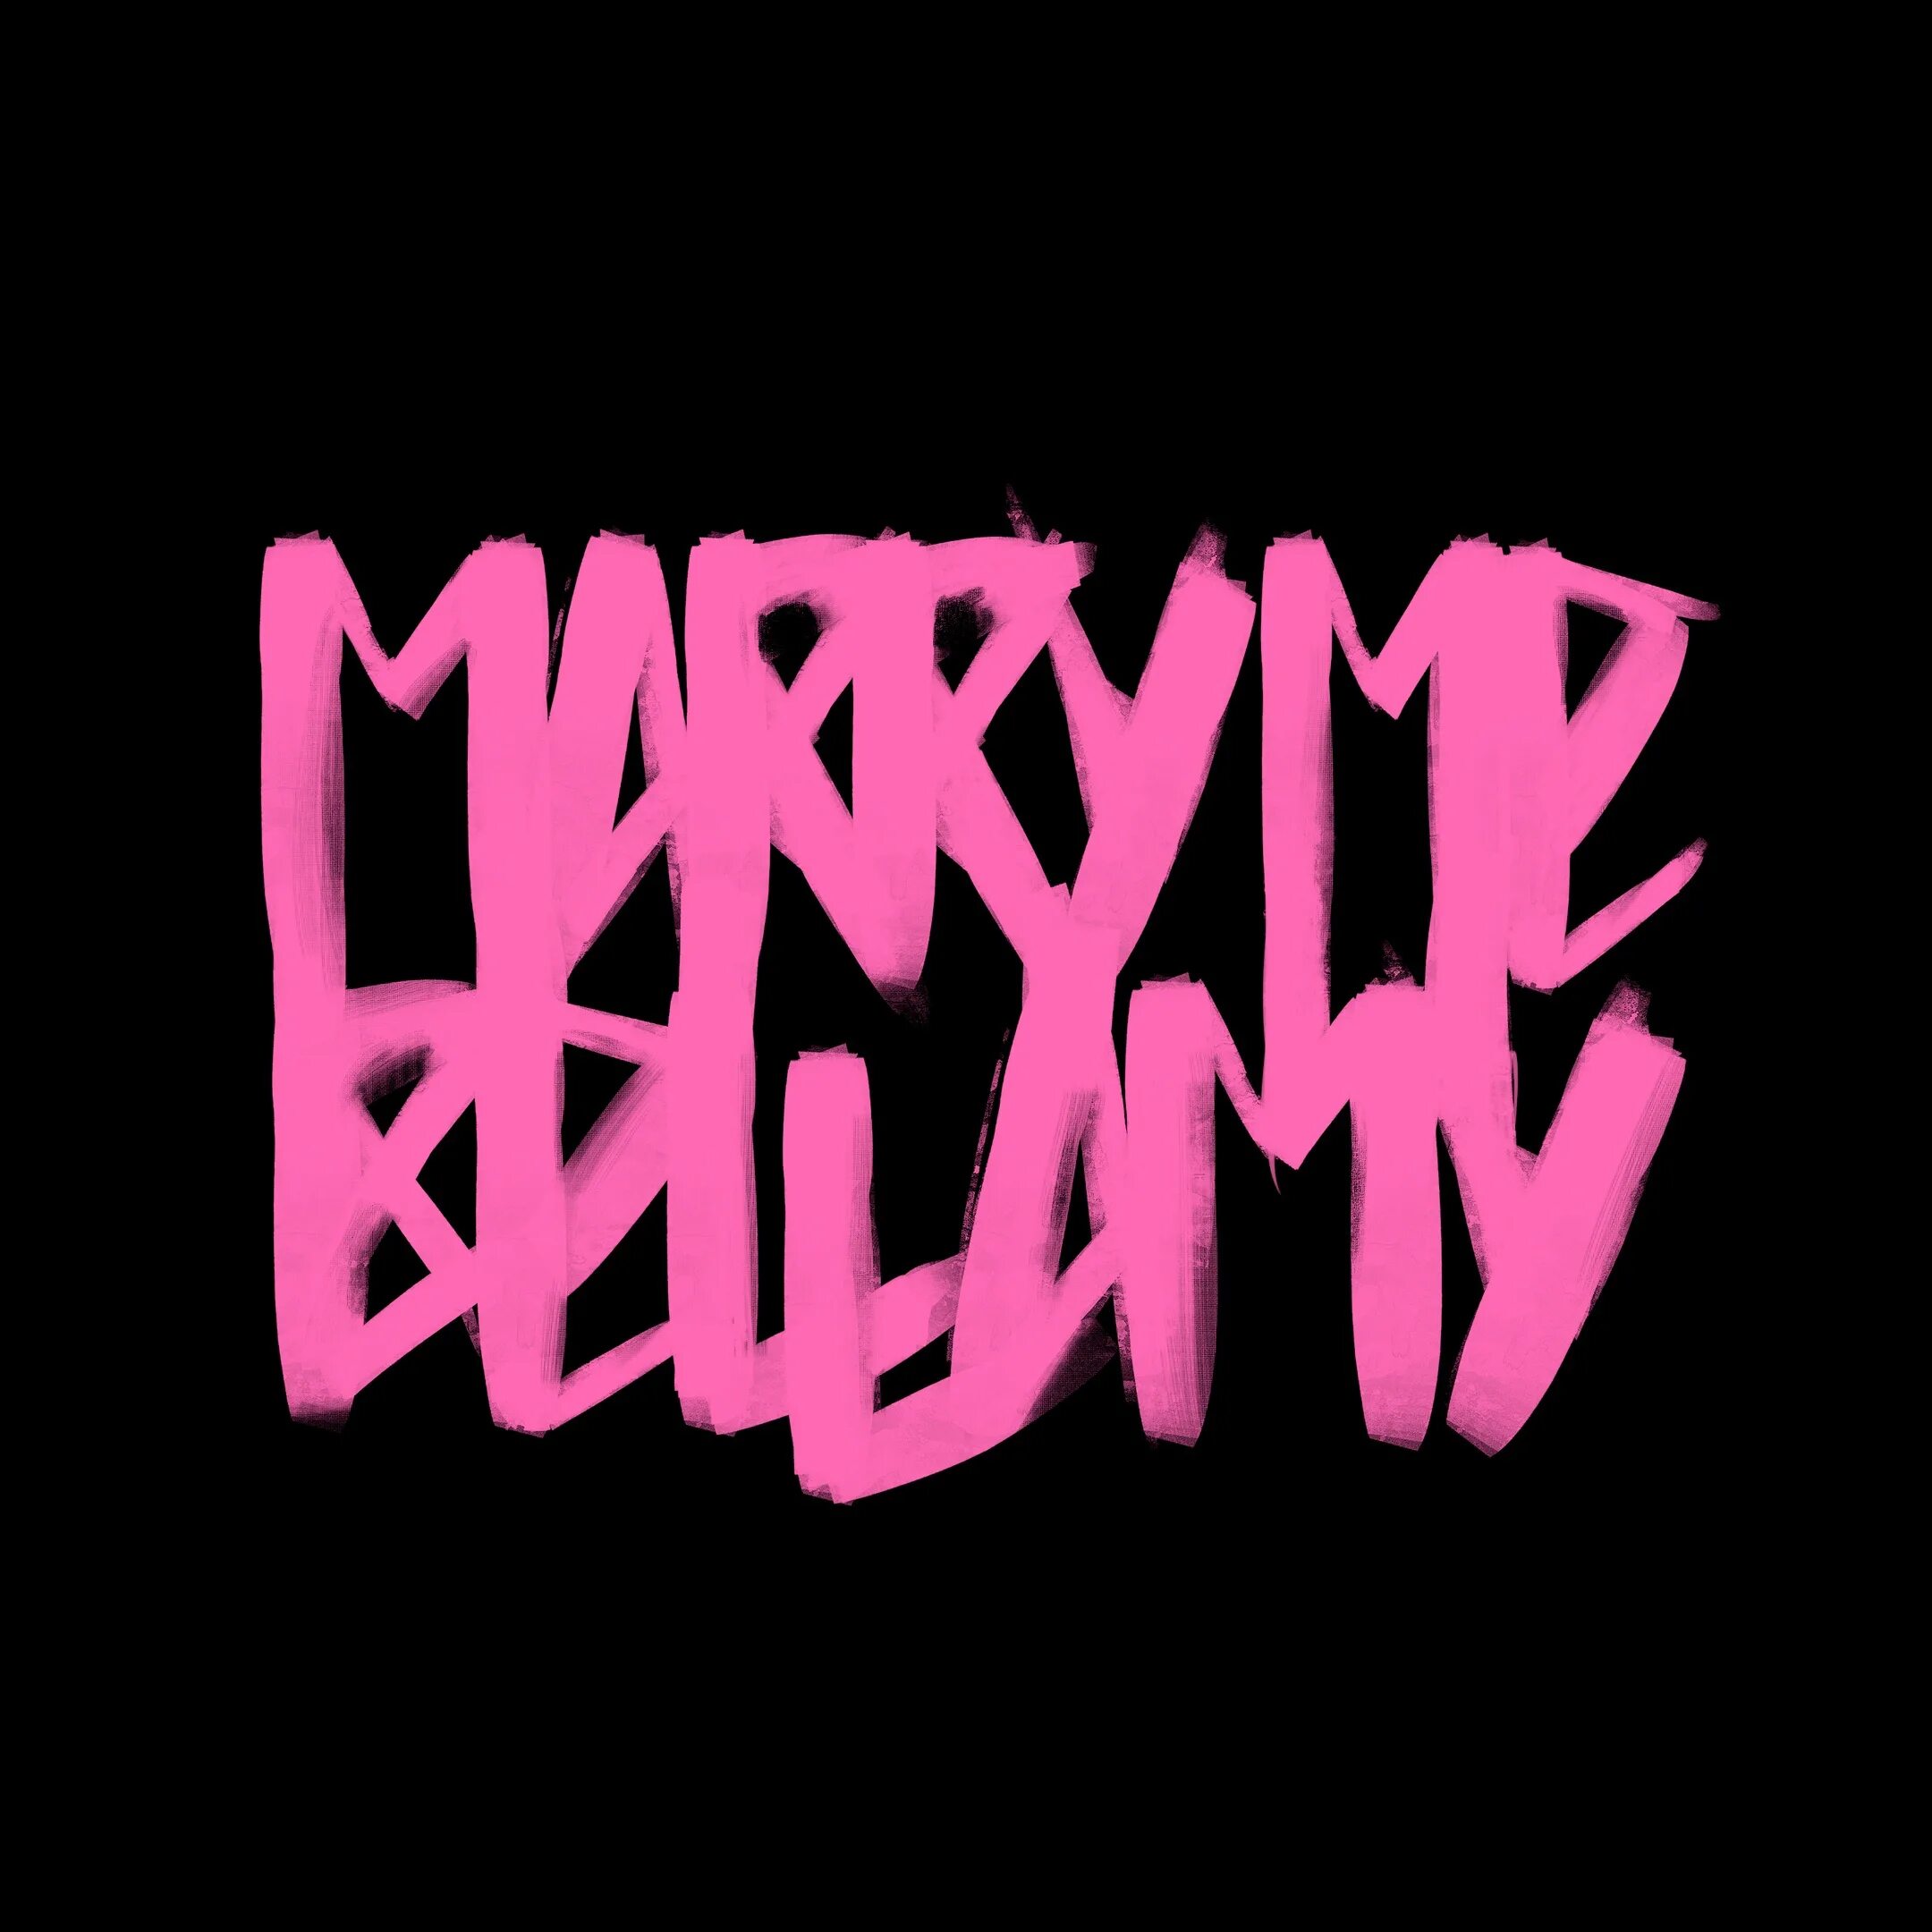 Marry me bellamy сосиска. Marry me Bellamy группа. Marry me Bellamy джеди. Marry me Bellamy мерч. Marry me Bellamy фото.